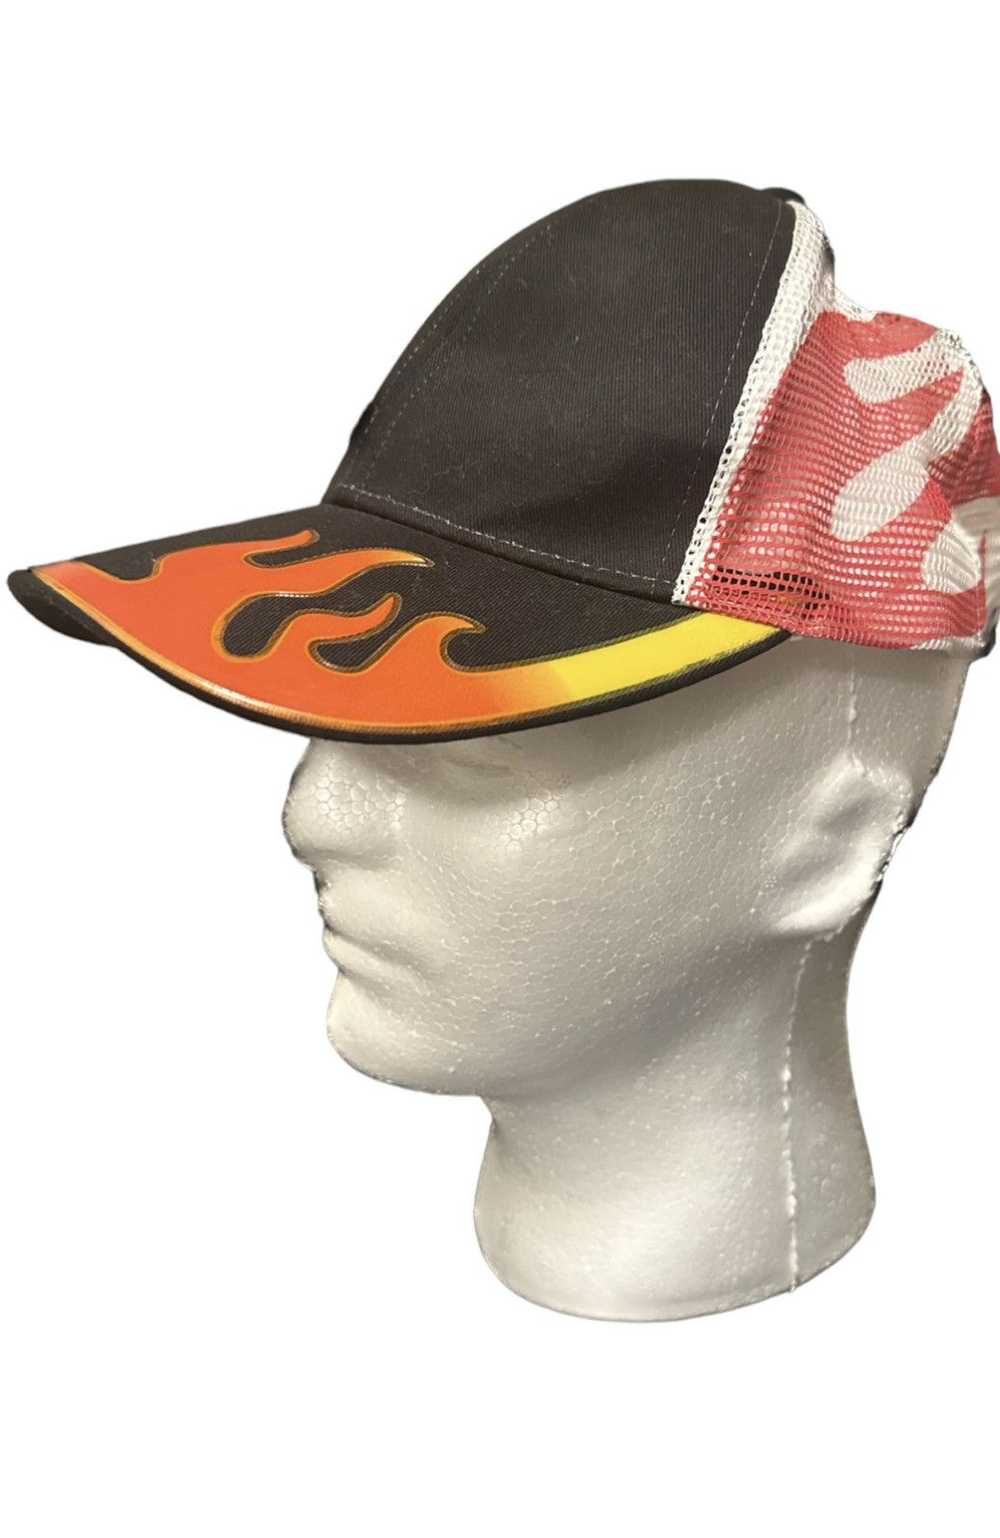 Custom × Hats × Streetwear Flame Cap - image 6